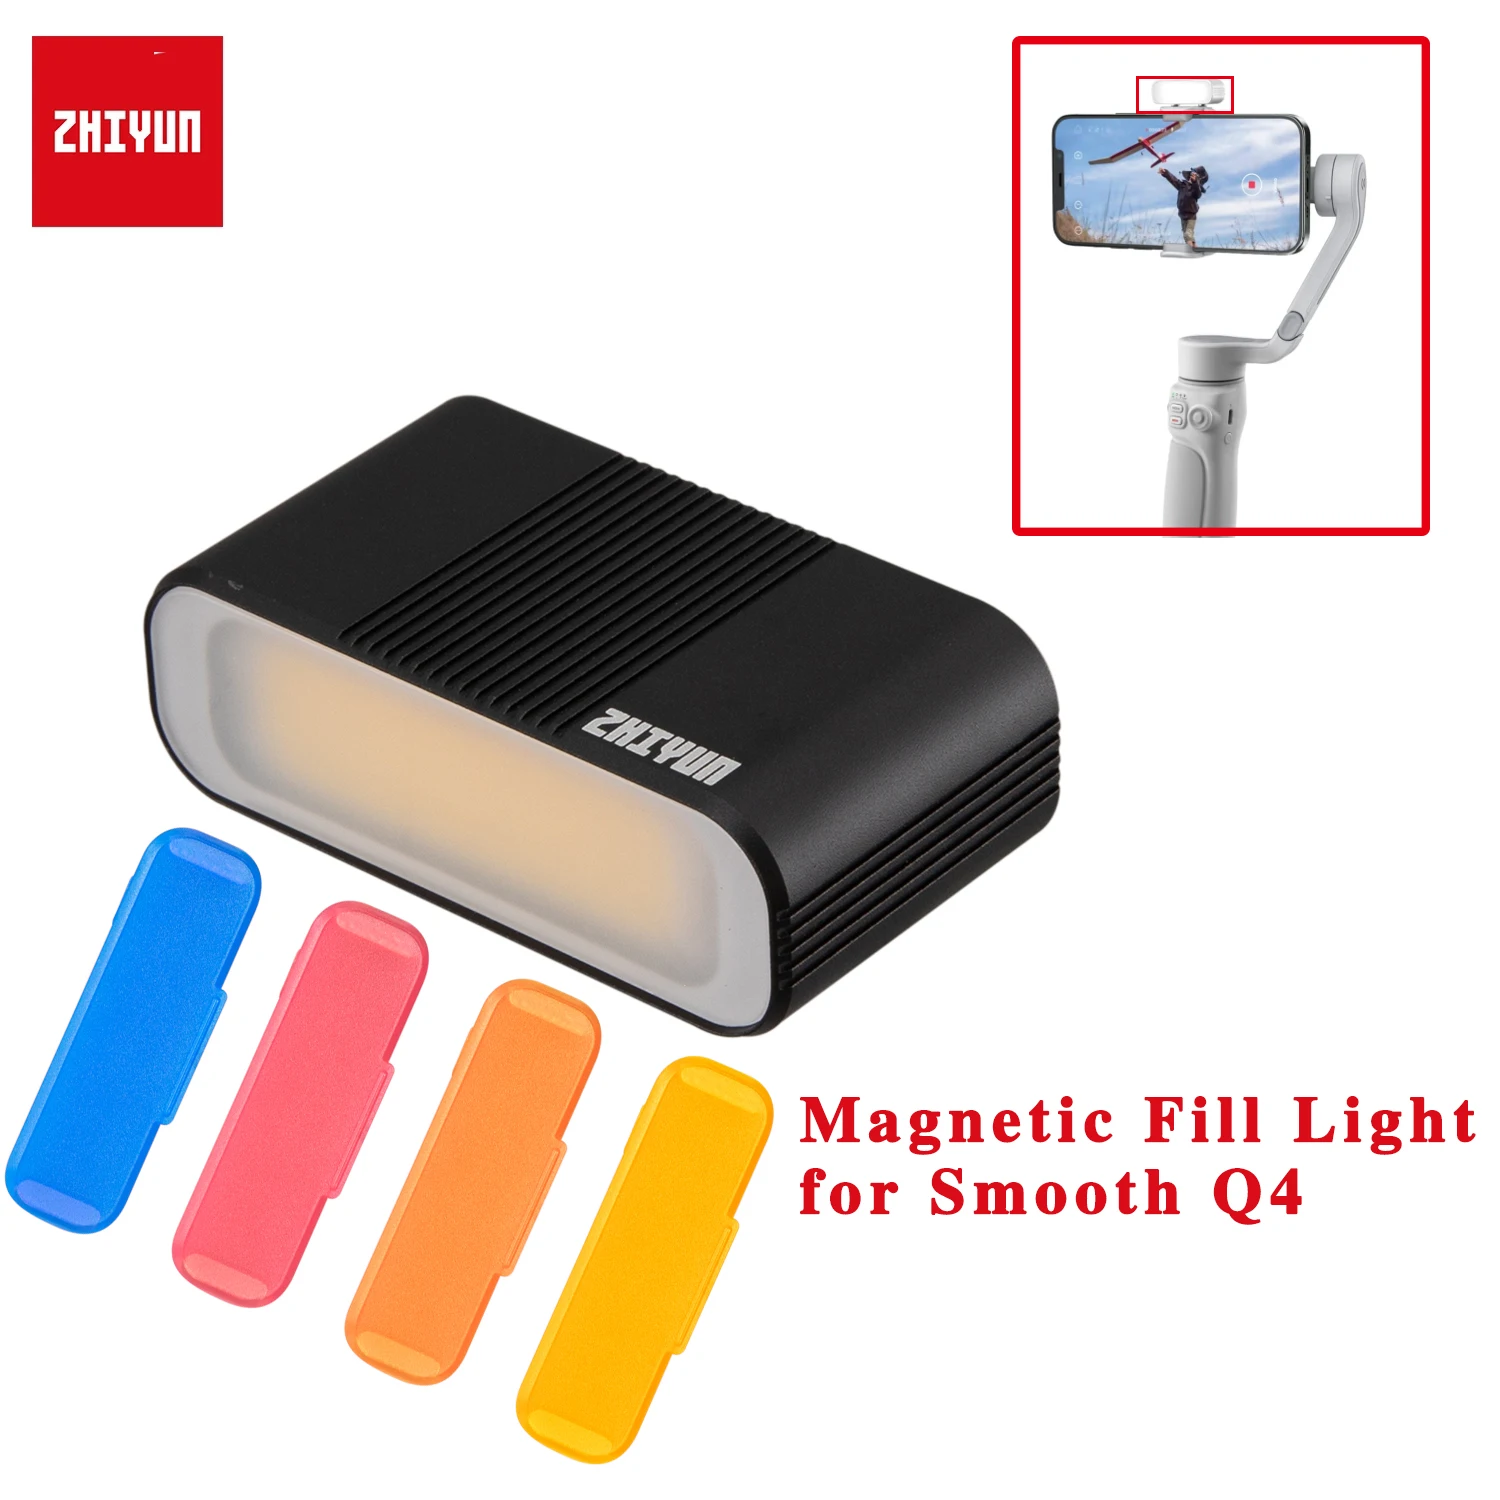 Zhiyun מגנטי מלא אור על המצלמה חלקה 5s/Q4 3-ציר כף יד טלפון חכם מאזנים מייצב אביזרים צבעים אקראיים התמונה 0